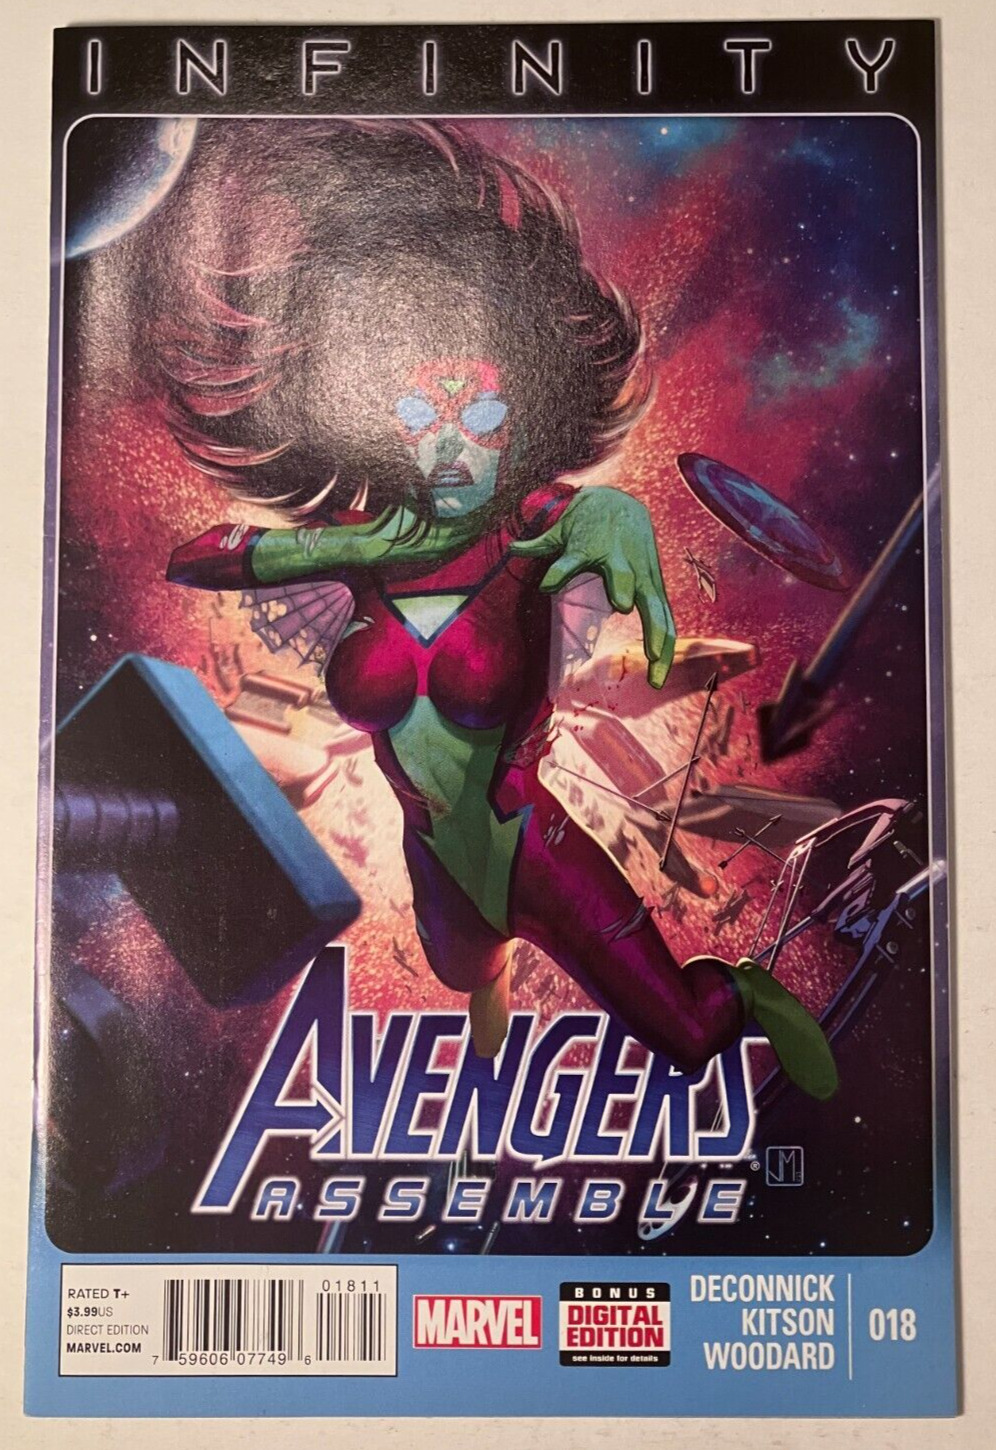 Avengers Assemble #18 - Jorge Molina (2013) - Marvel Comics (bag/board)